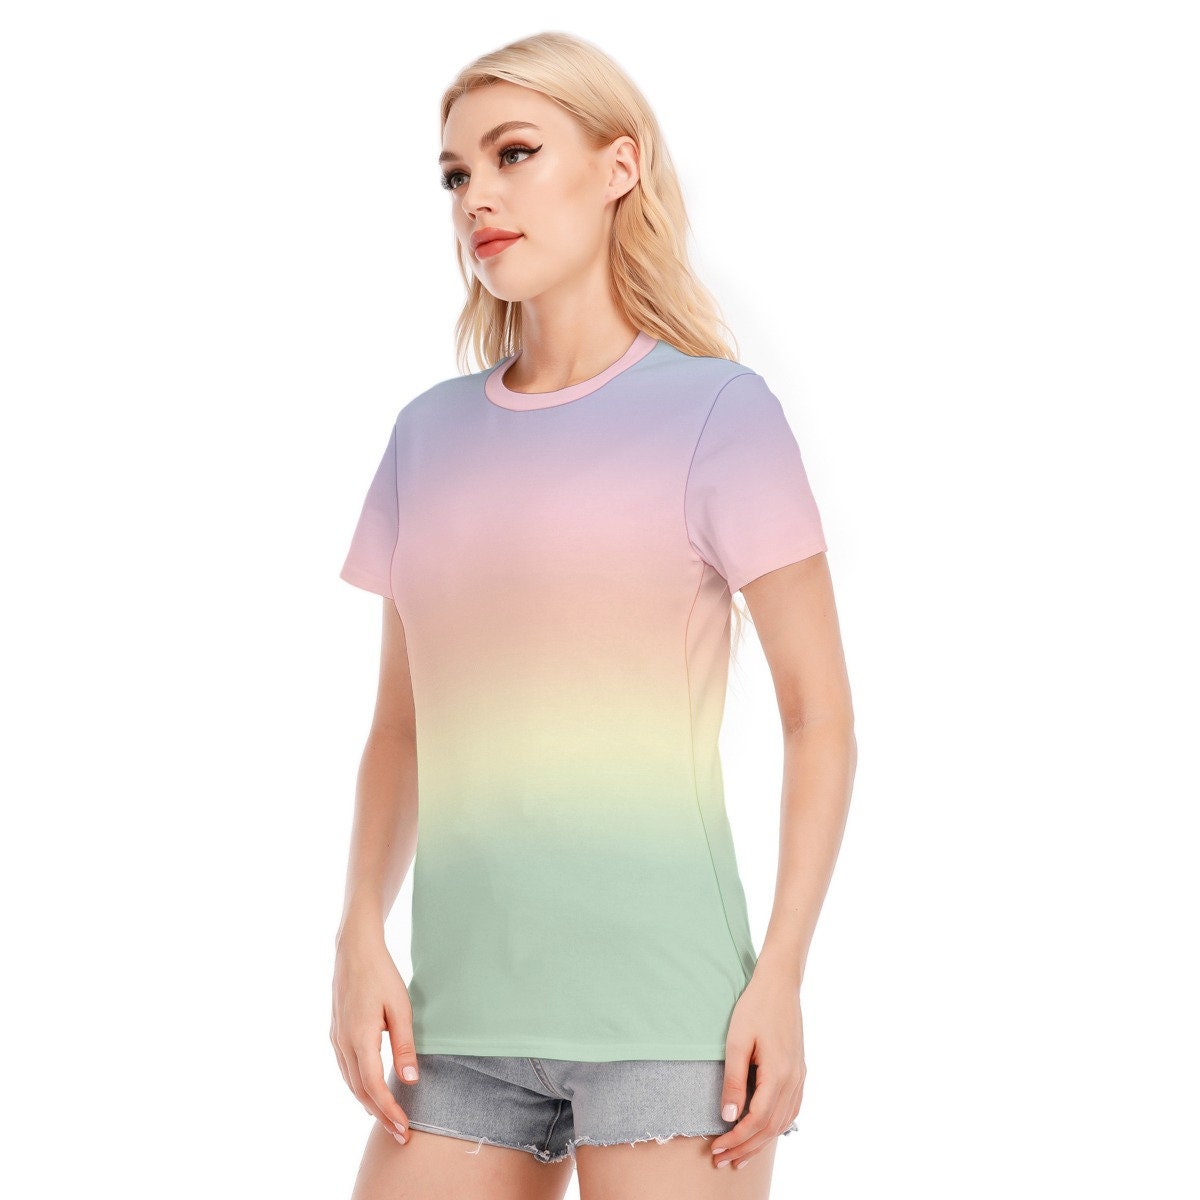 Ombre Top, Rainbow Tops, Ombre Tshirt, Rainbow T-shirt, Womens Tshirts, Unique Tshirt, Ombre T-shirt, Abstract Tshirt, Artistic Tshirt